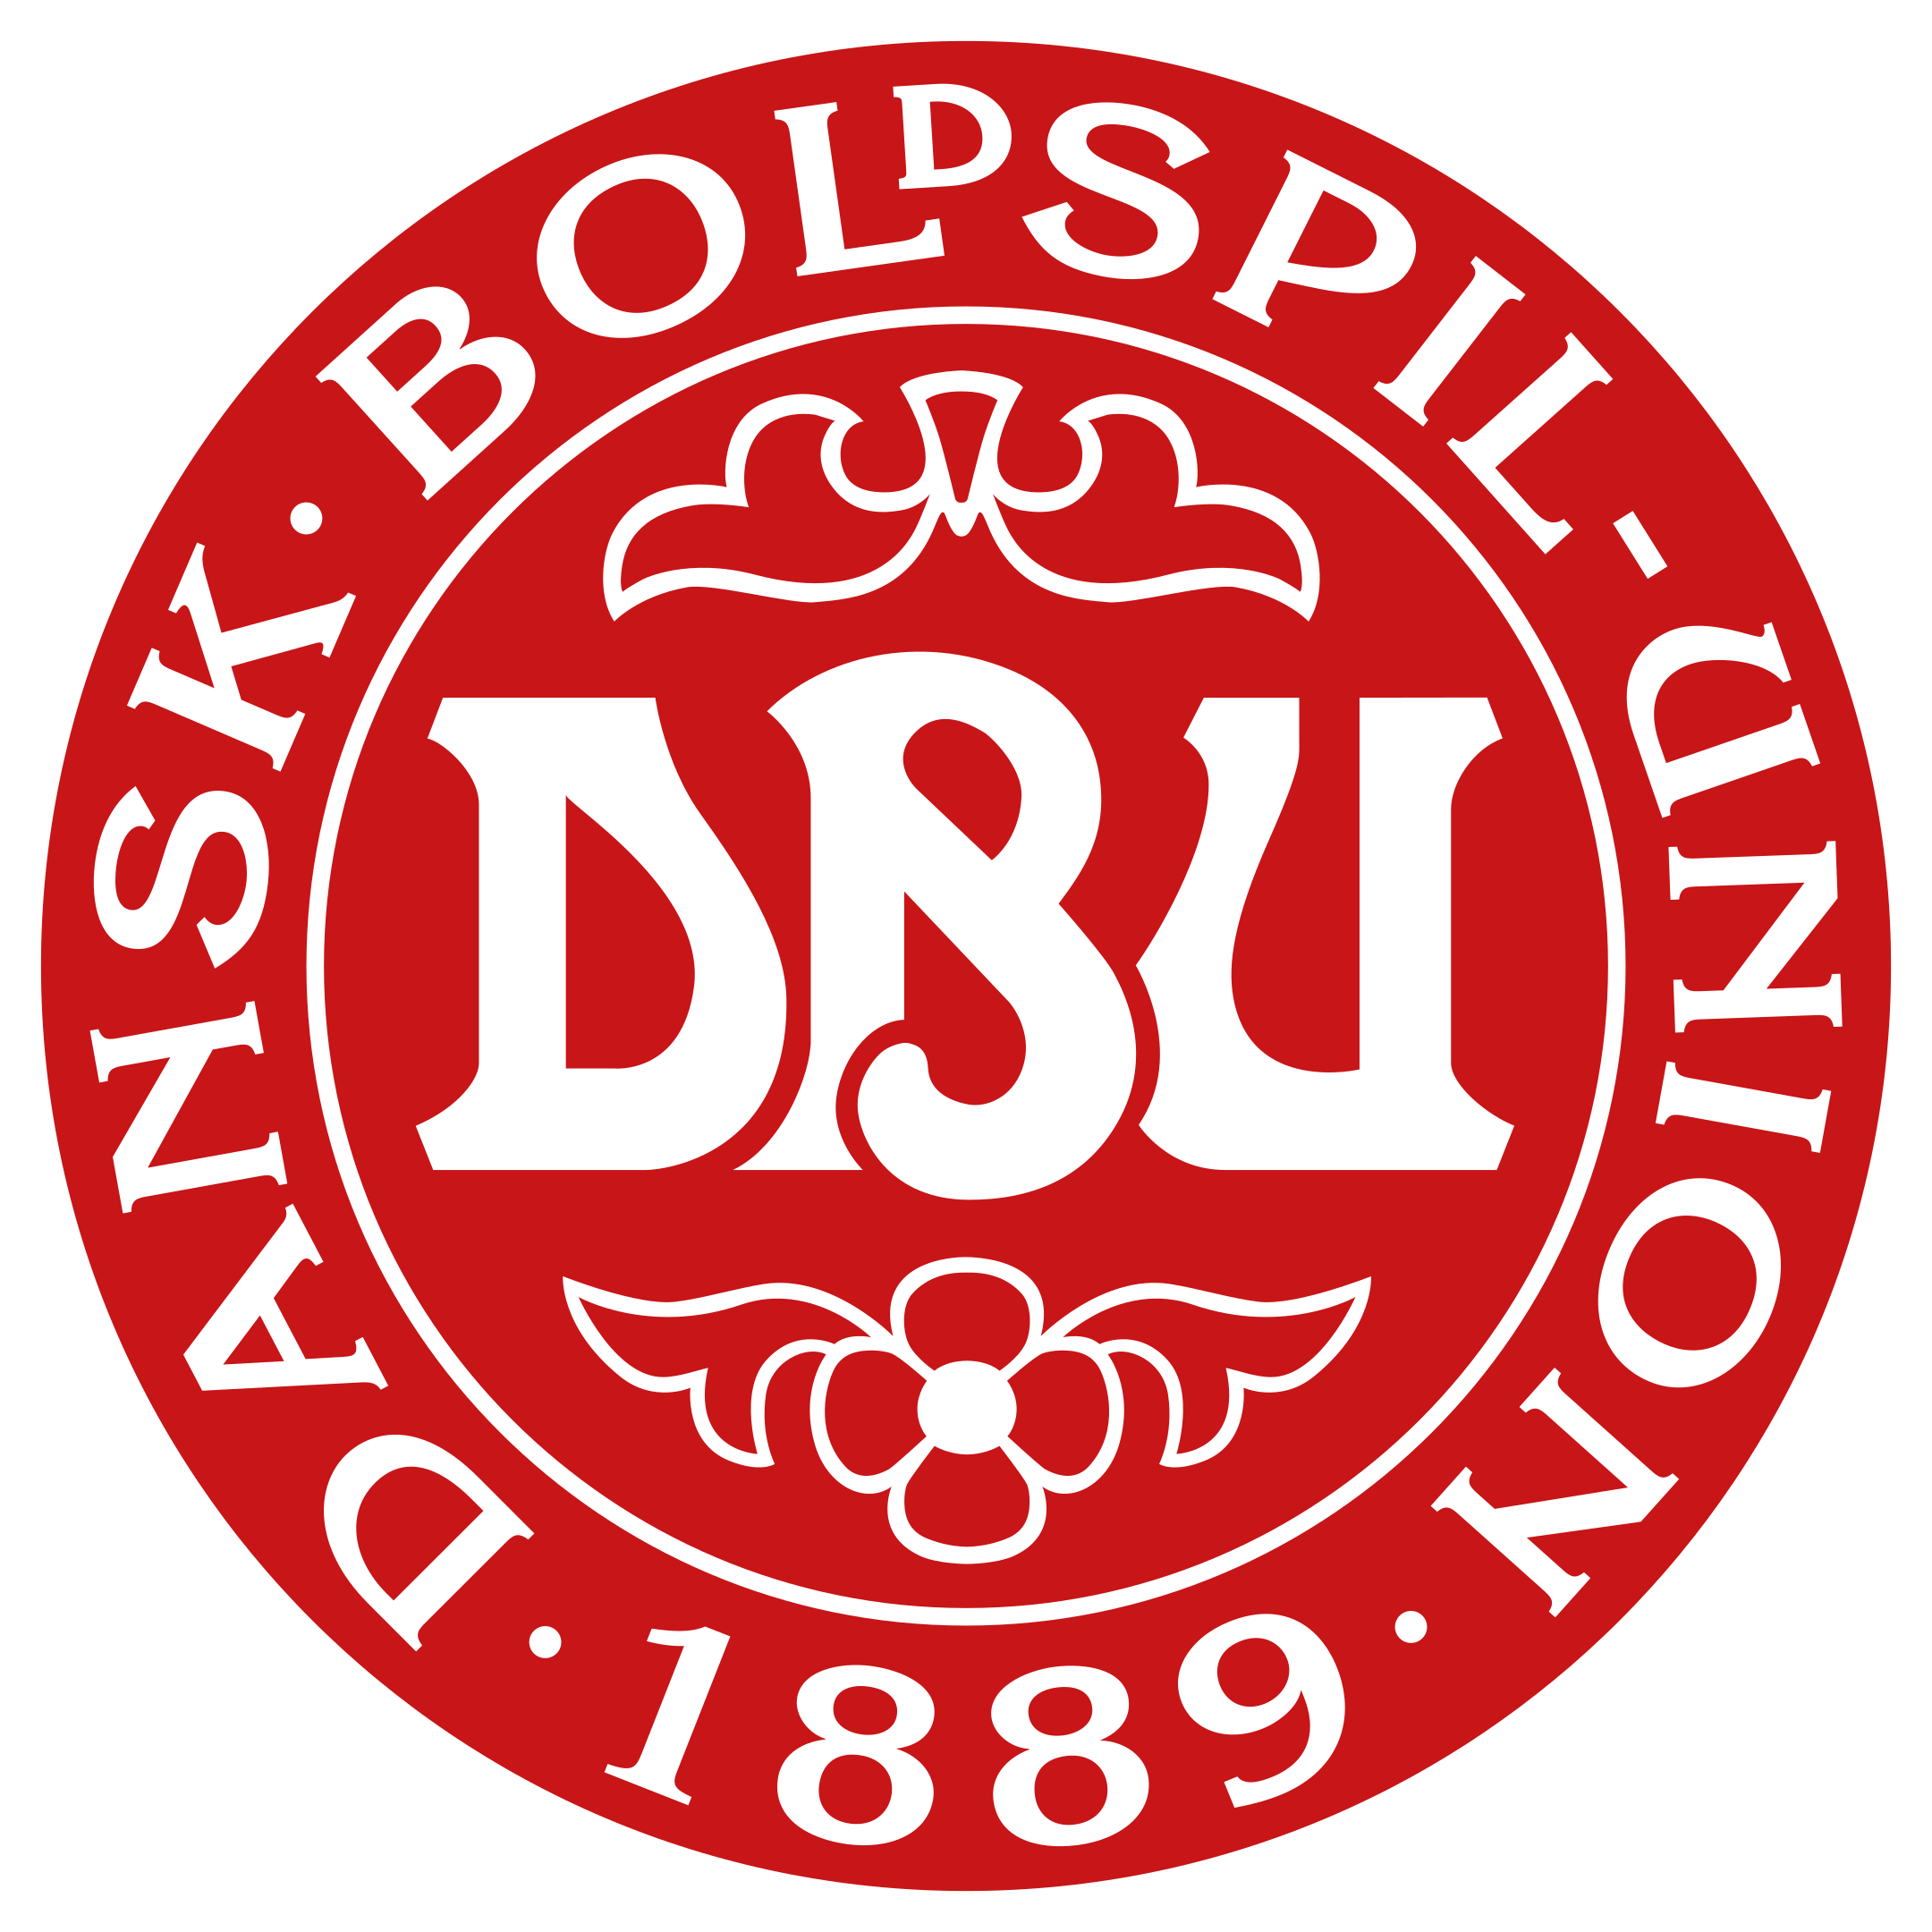 denmark national football team logo 1 - Équipe du Danemark de Football Logo